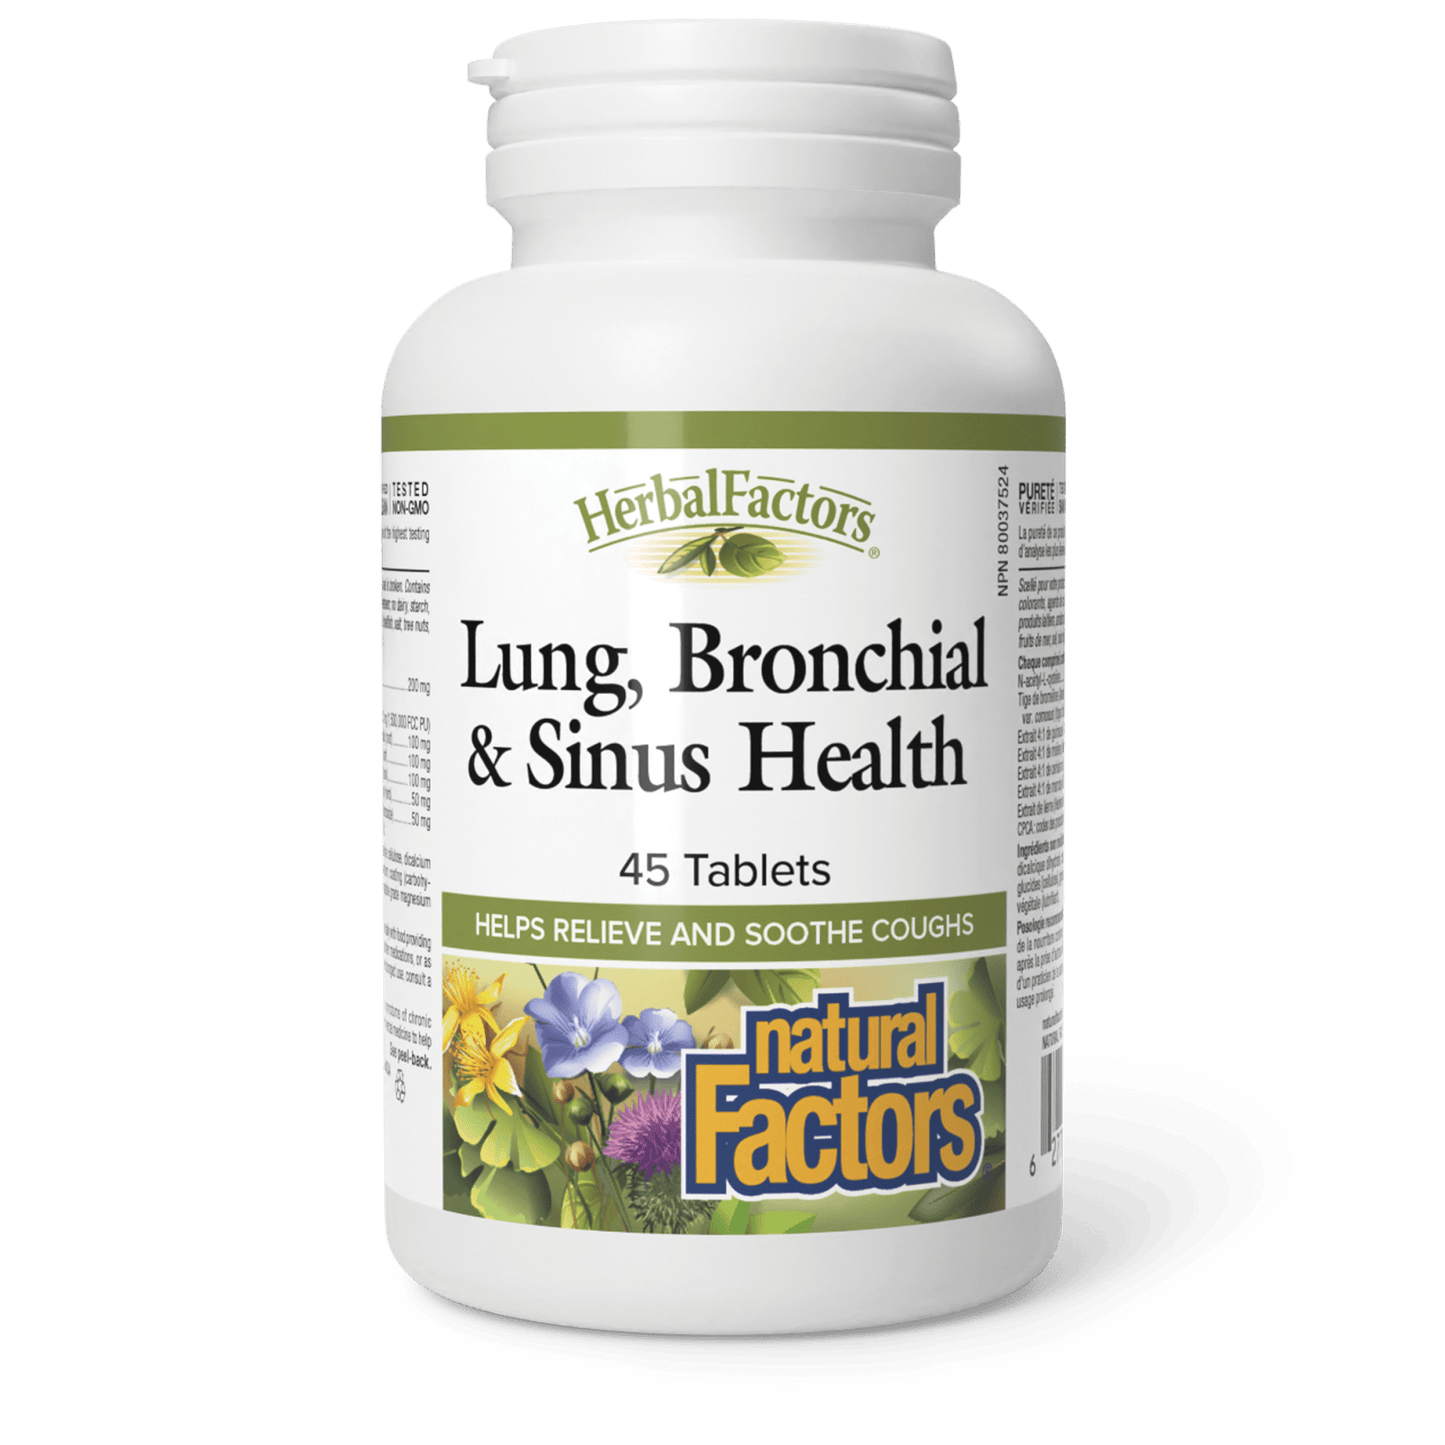 Lung, Bronchial & Sinus Health, HerbalFactors, Natural Factors|v|image|3504